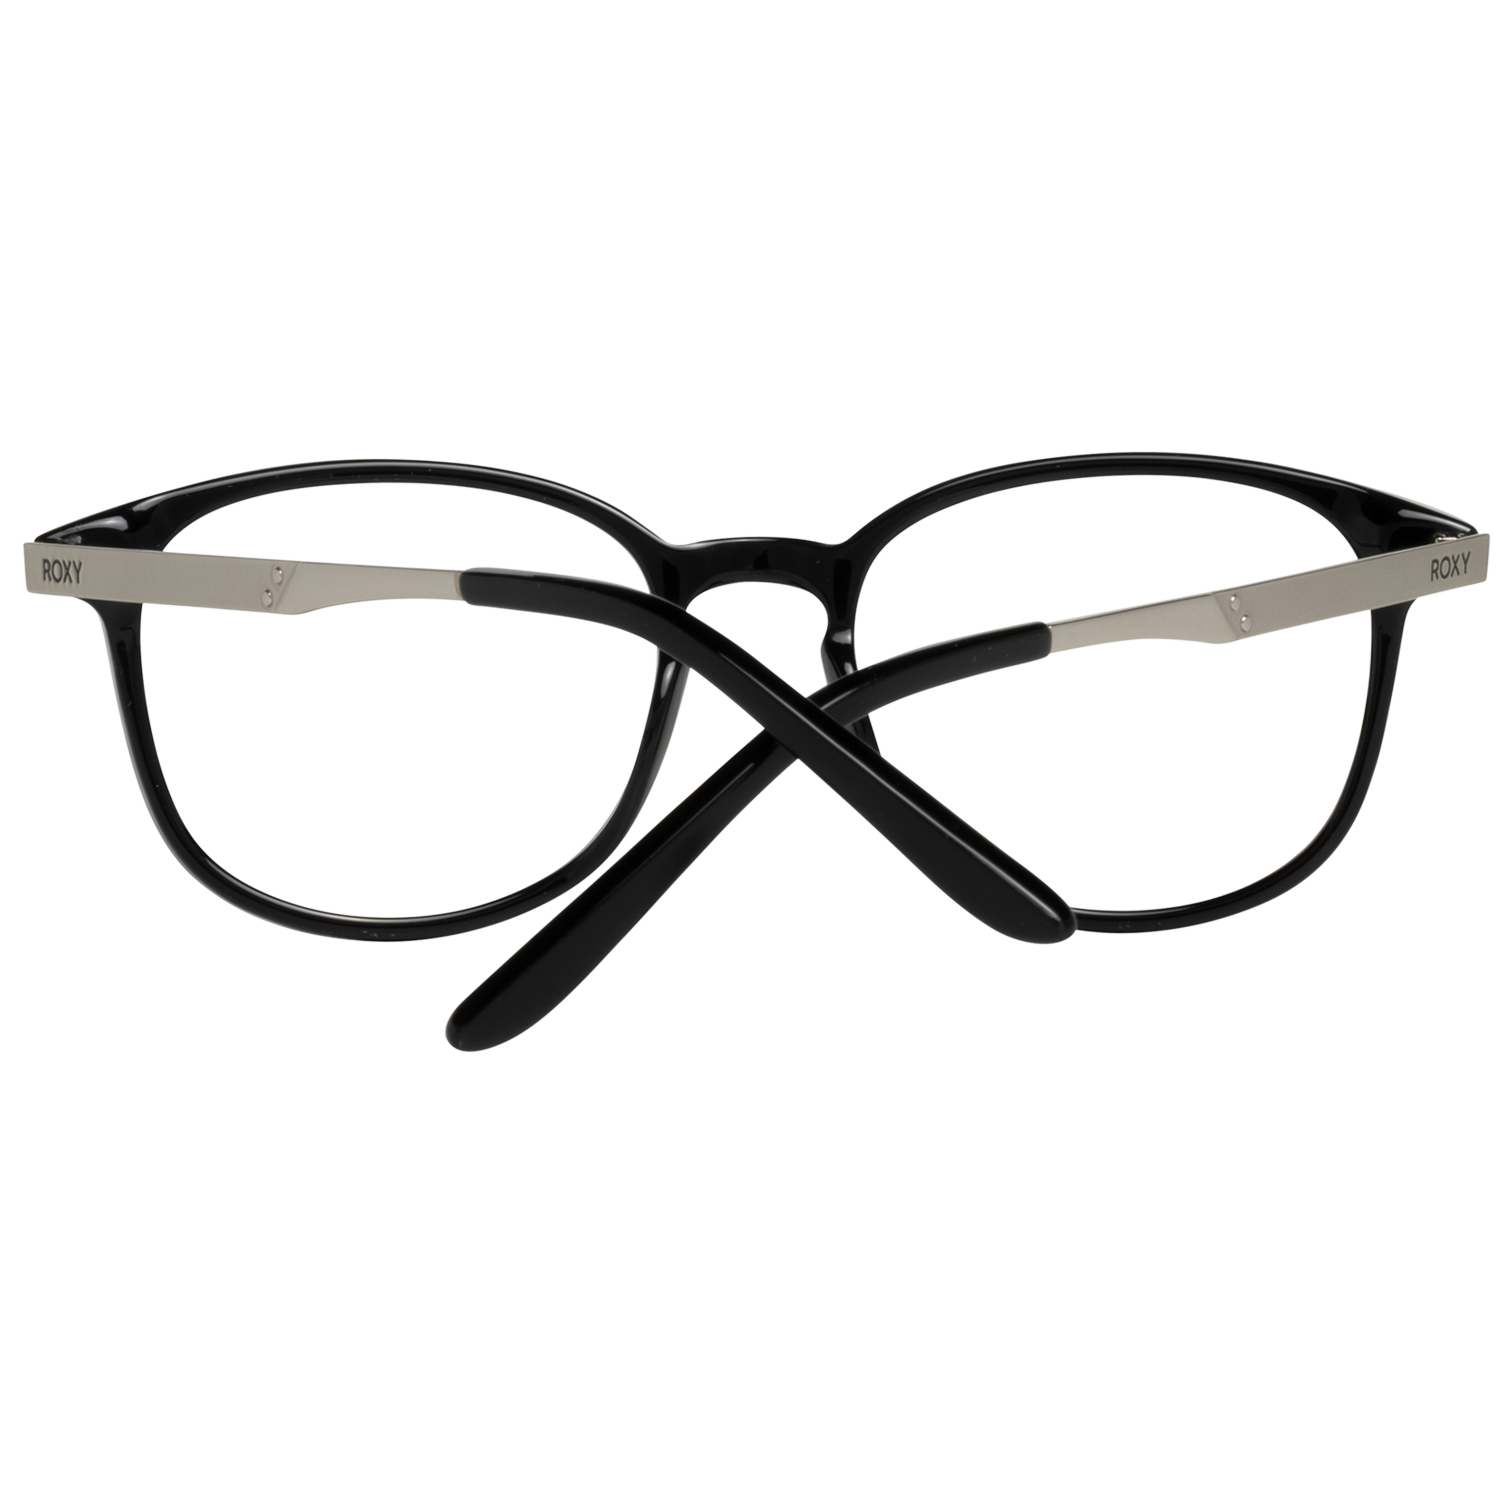 Roxy Frames Roxy Glasses Optical Frame ERJEG03028 DBLK 49 Eyeglasses Eyewear UK USA Australia 